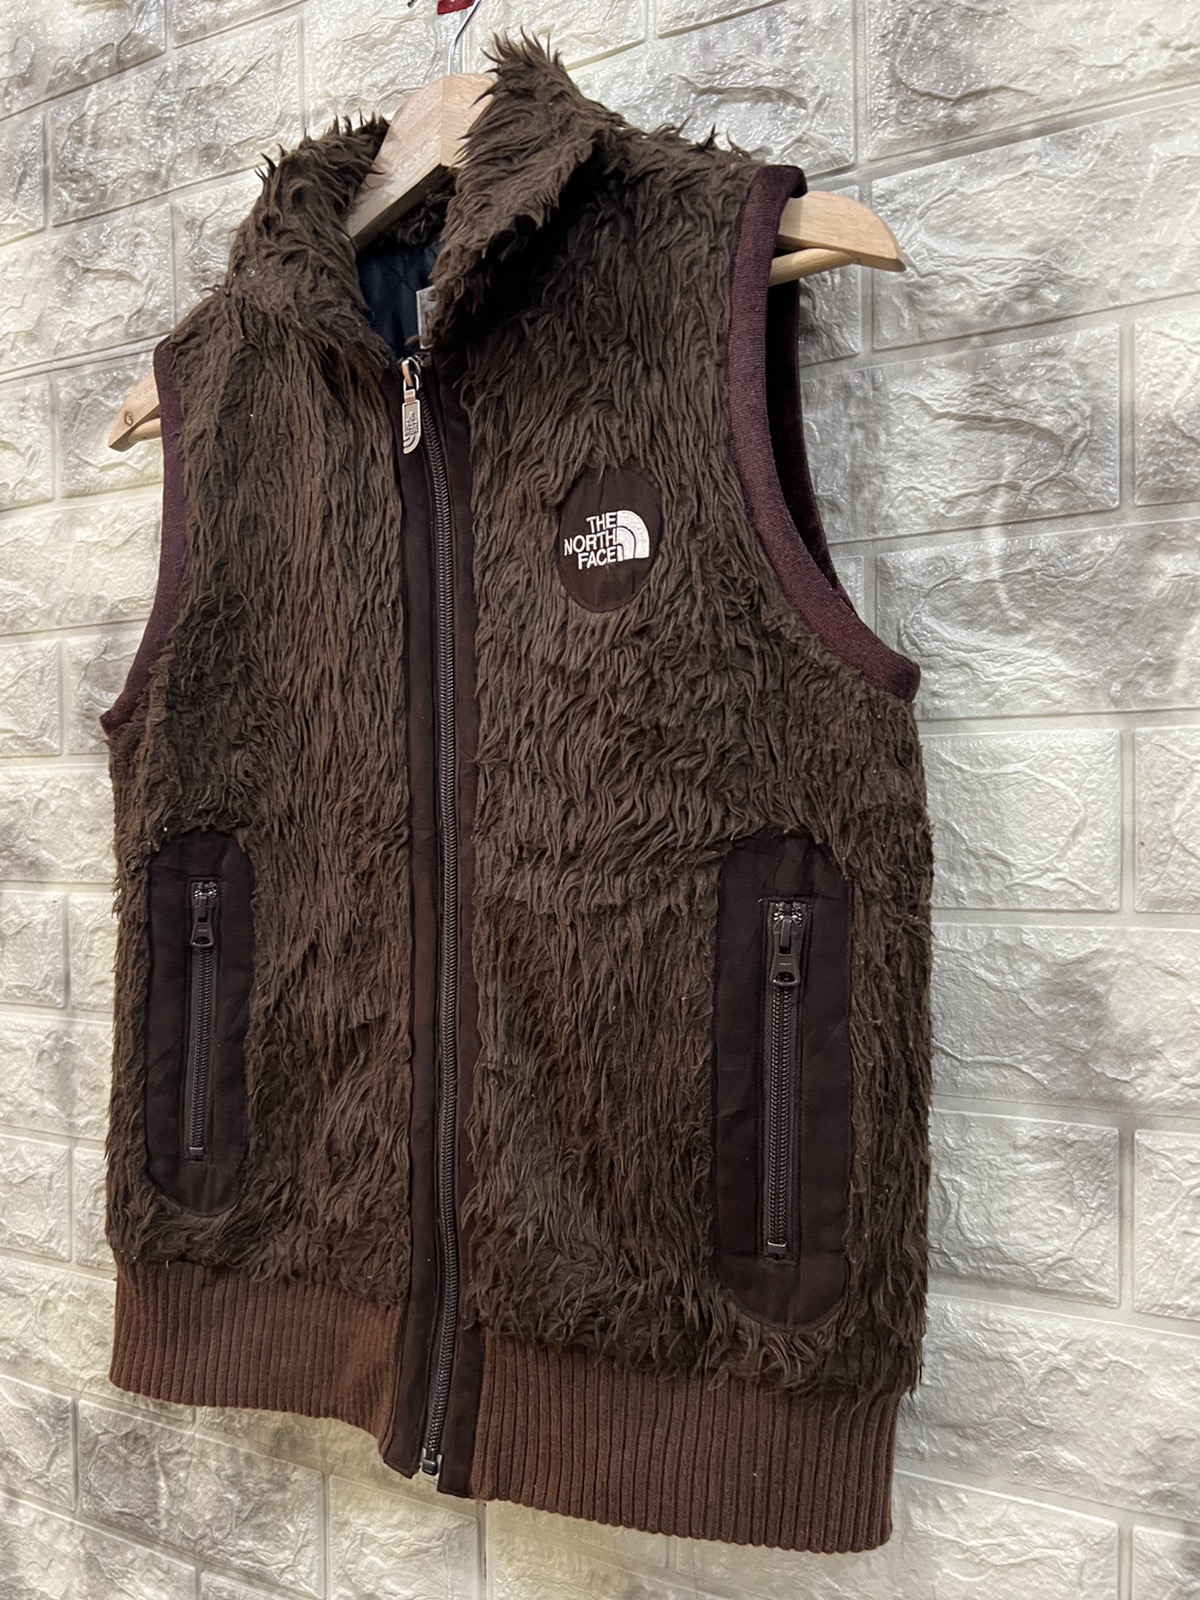 The North Face Cookie Fur Vest - 3